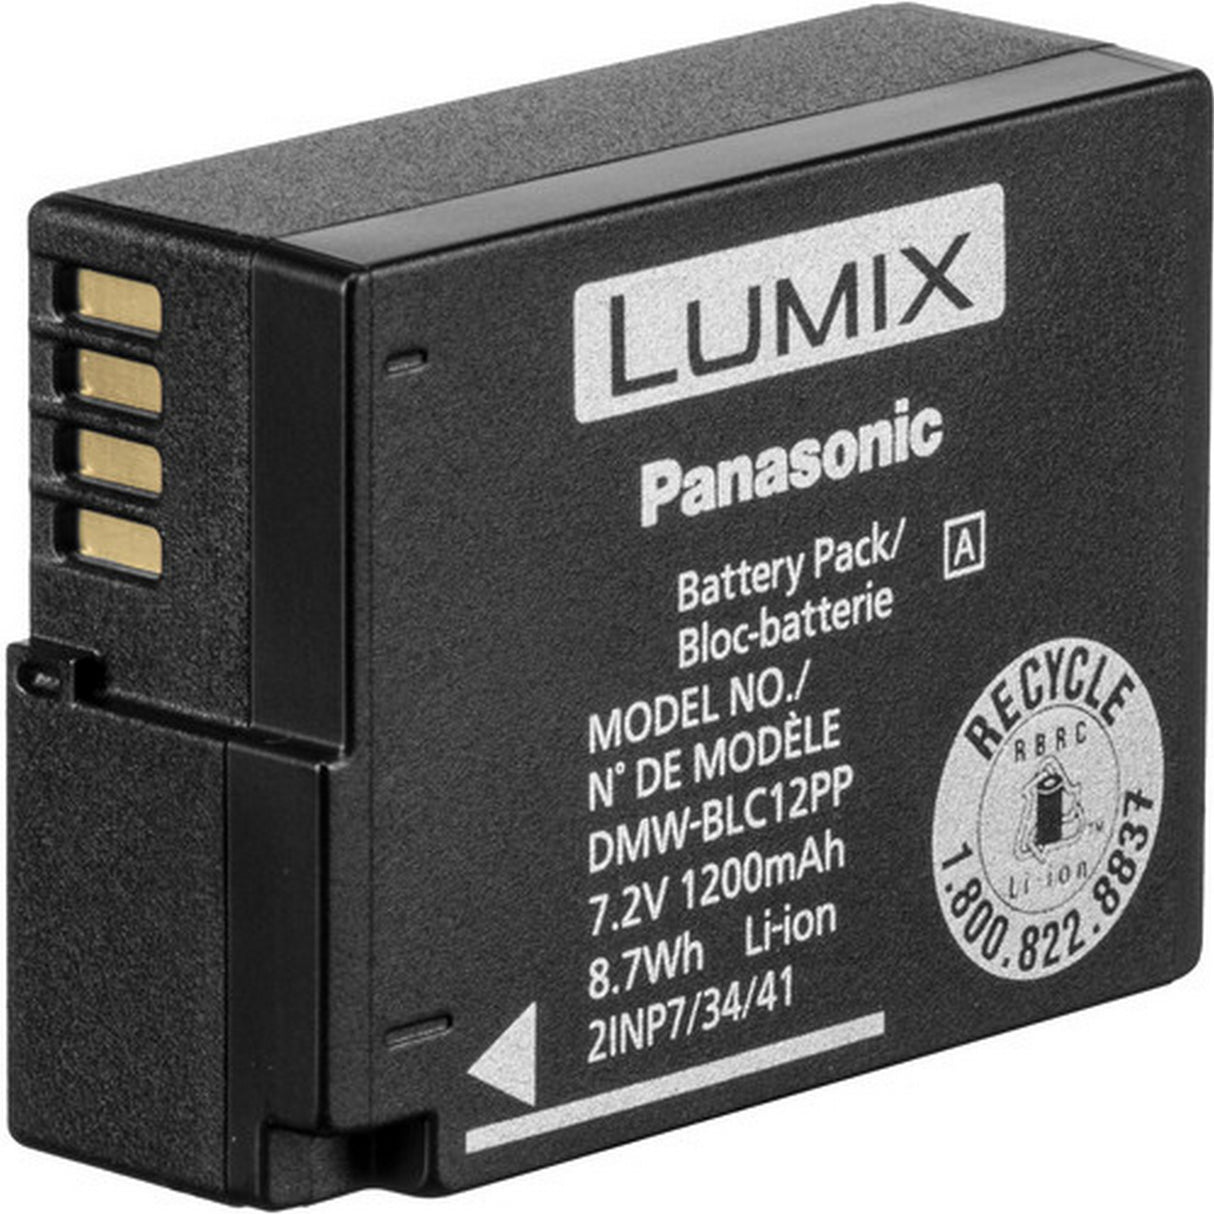 Panasonic LUMIX DMW-BLC12 Rechargeable Lithium-ion Battery 7.2V 1200mAh for Select Lumix Digital Cameras